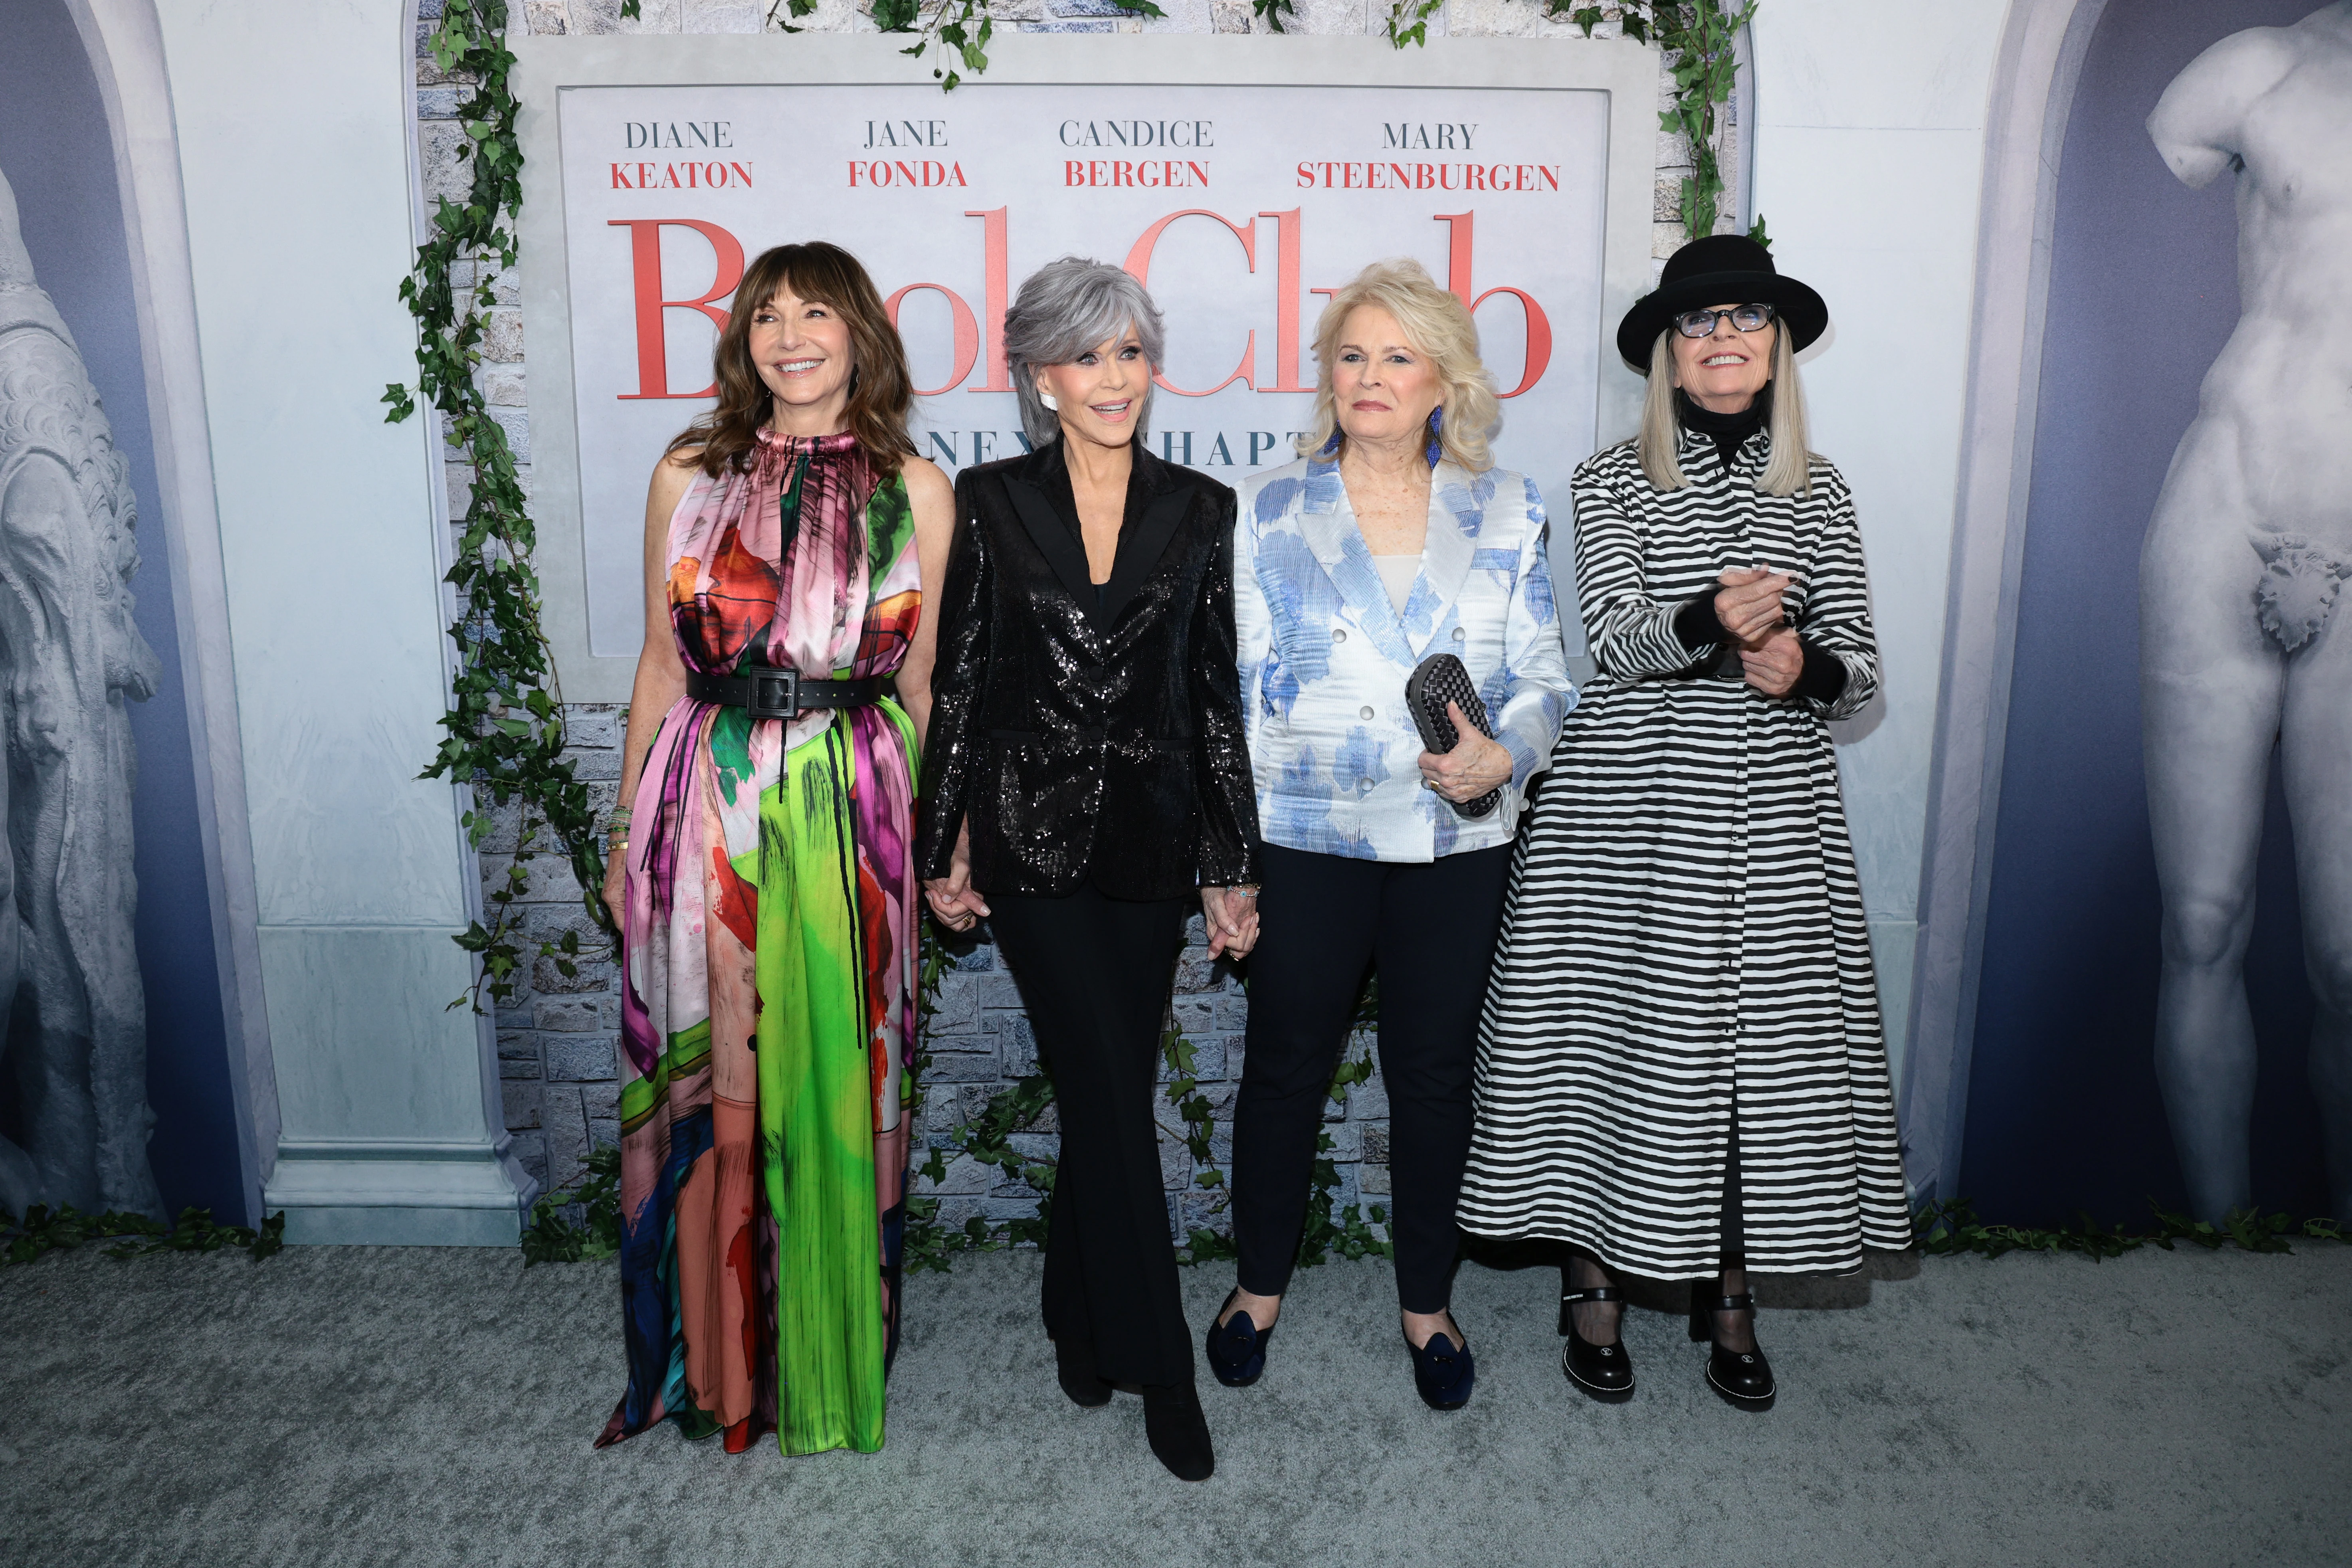 Mary Steenburgen, Jane Fonda, Candice Bergen and Diane Keaton